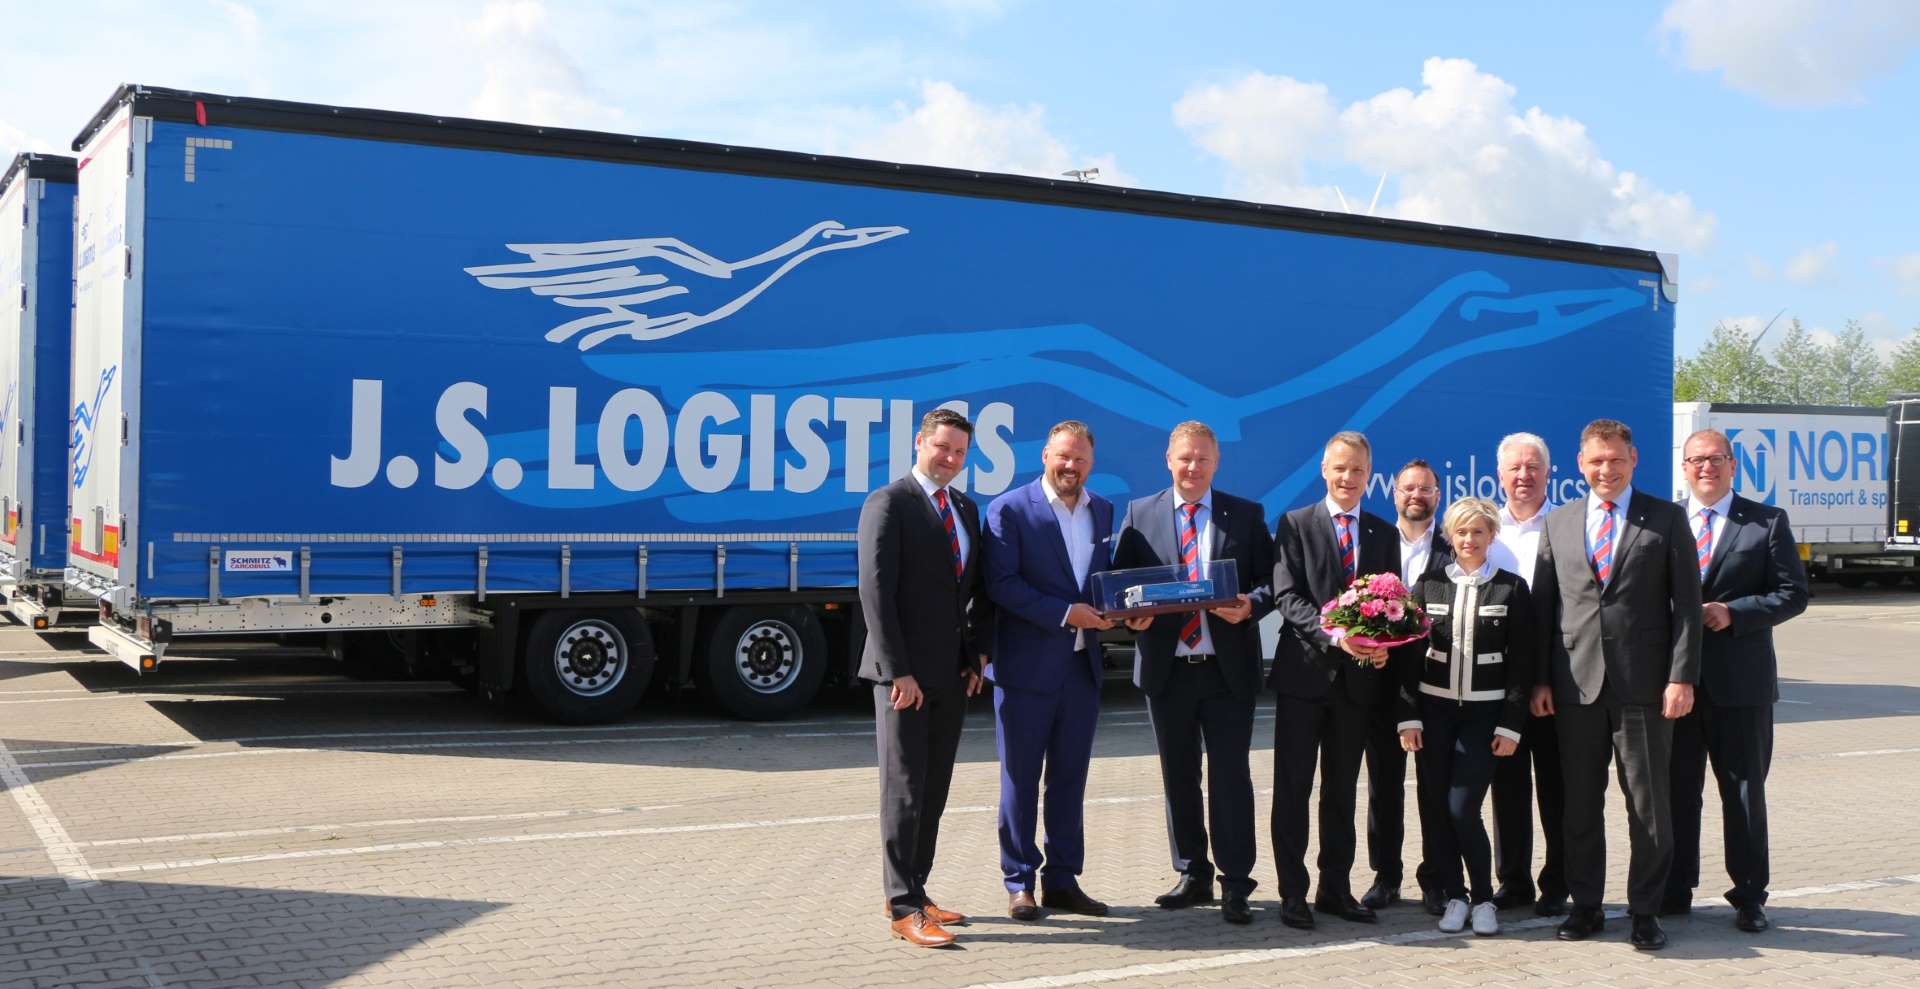 Partnership between J.S. Logistics and Schmitz Cargobull